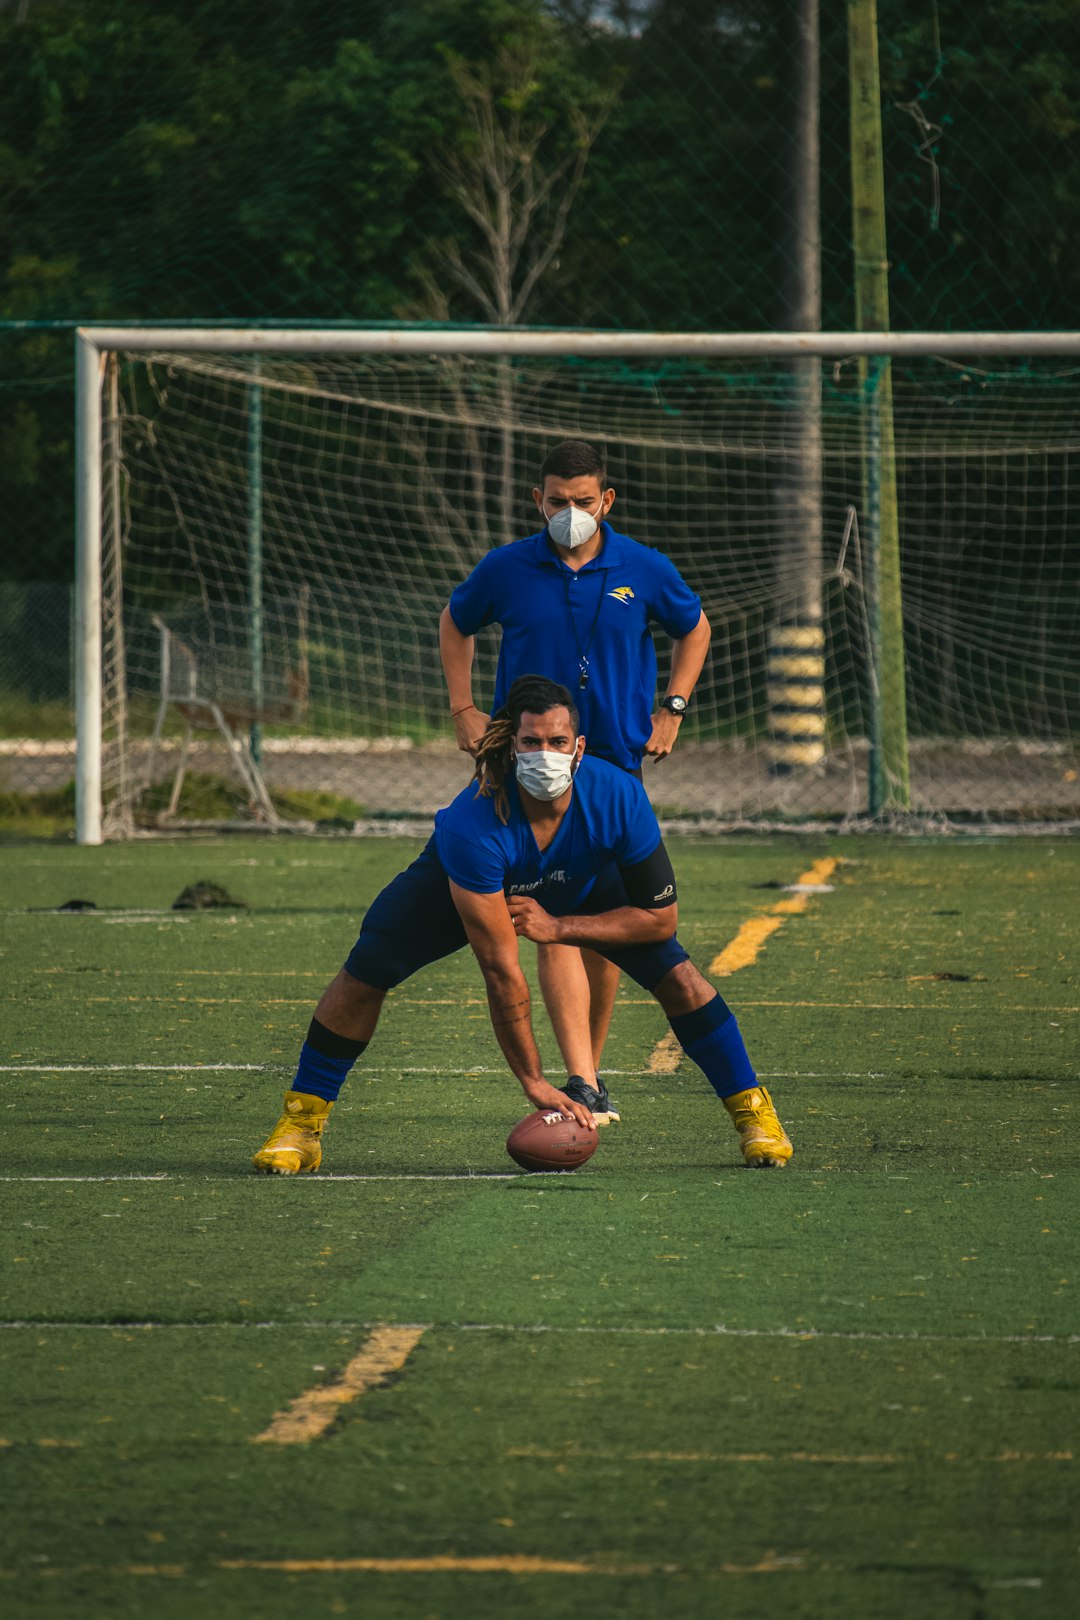 man in blue soccer jersey kicking soccer ball on green grass field during daytime